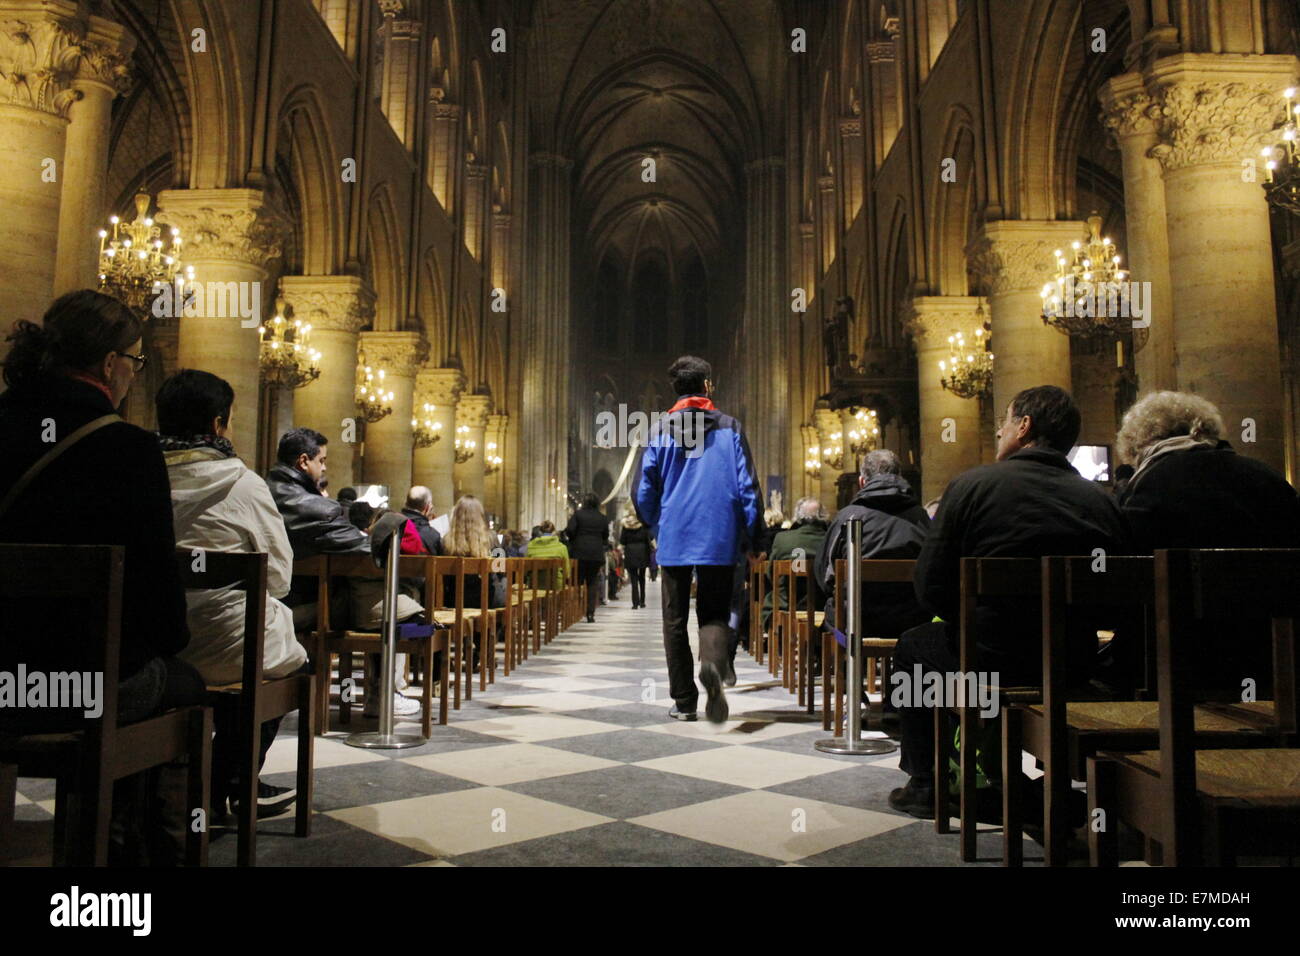 Innenseite Kathedrale Notre Dame de Paris, Paris, Frankreich. Stockfoto